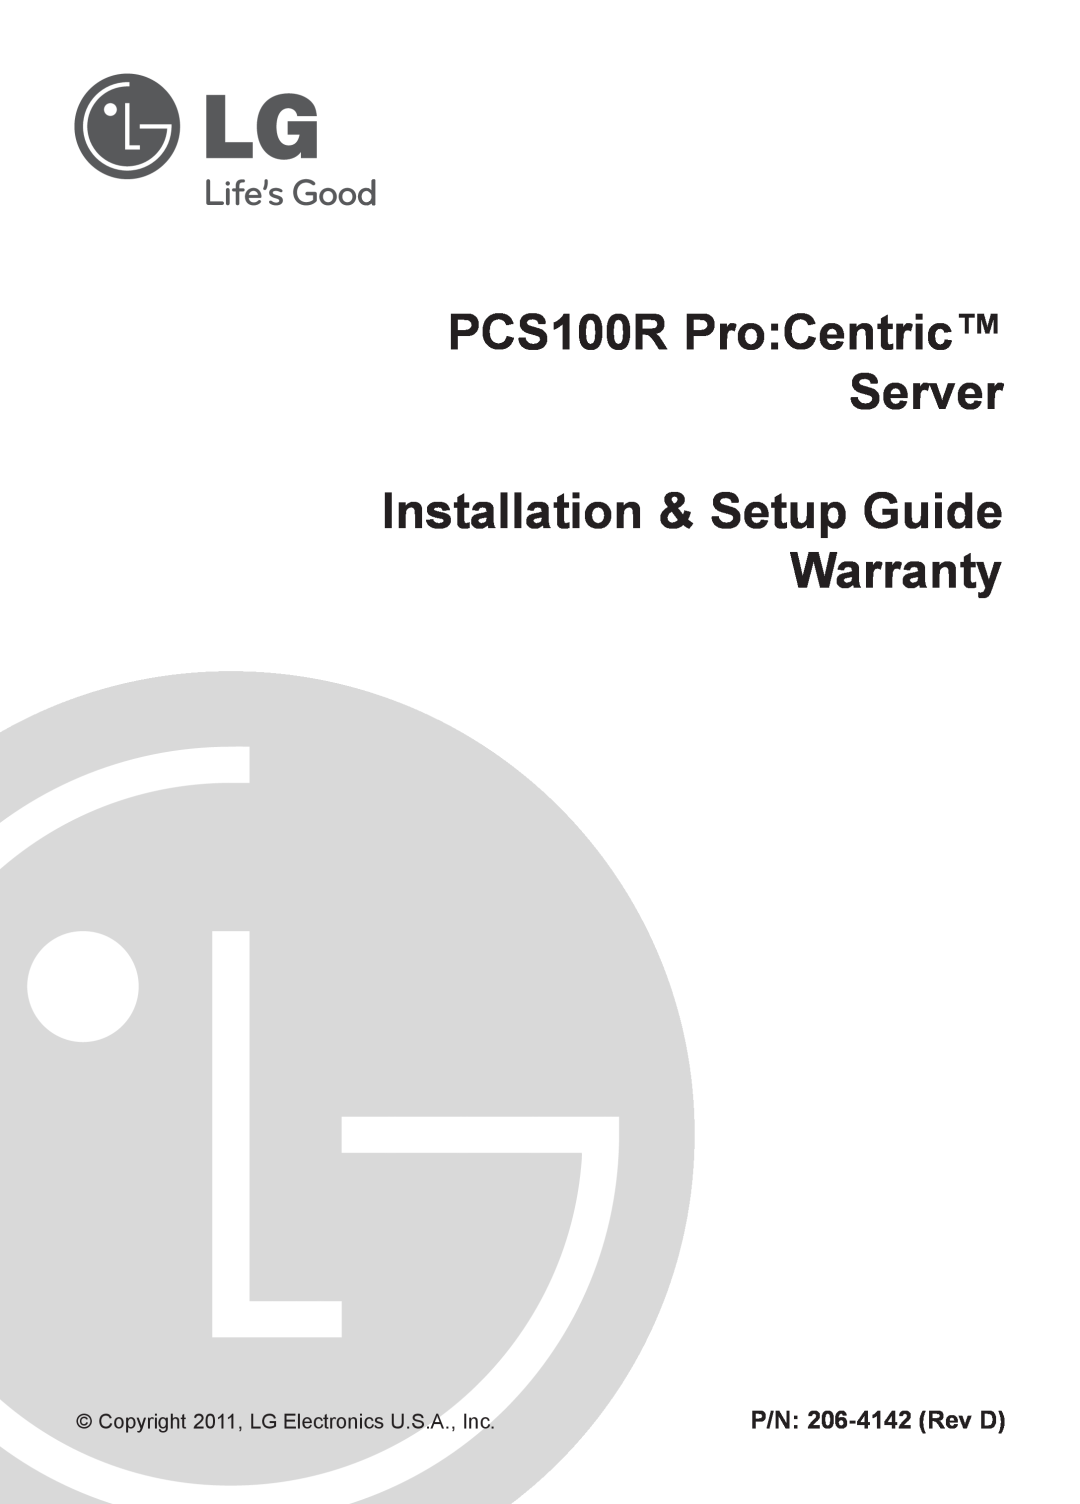 LG Electronics setup guide PCS100R ProCentric Server Installation & Setup Guide Warranty, P/N 206-4142 Rev D 